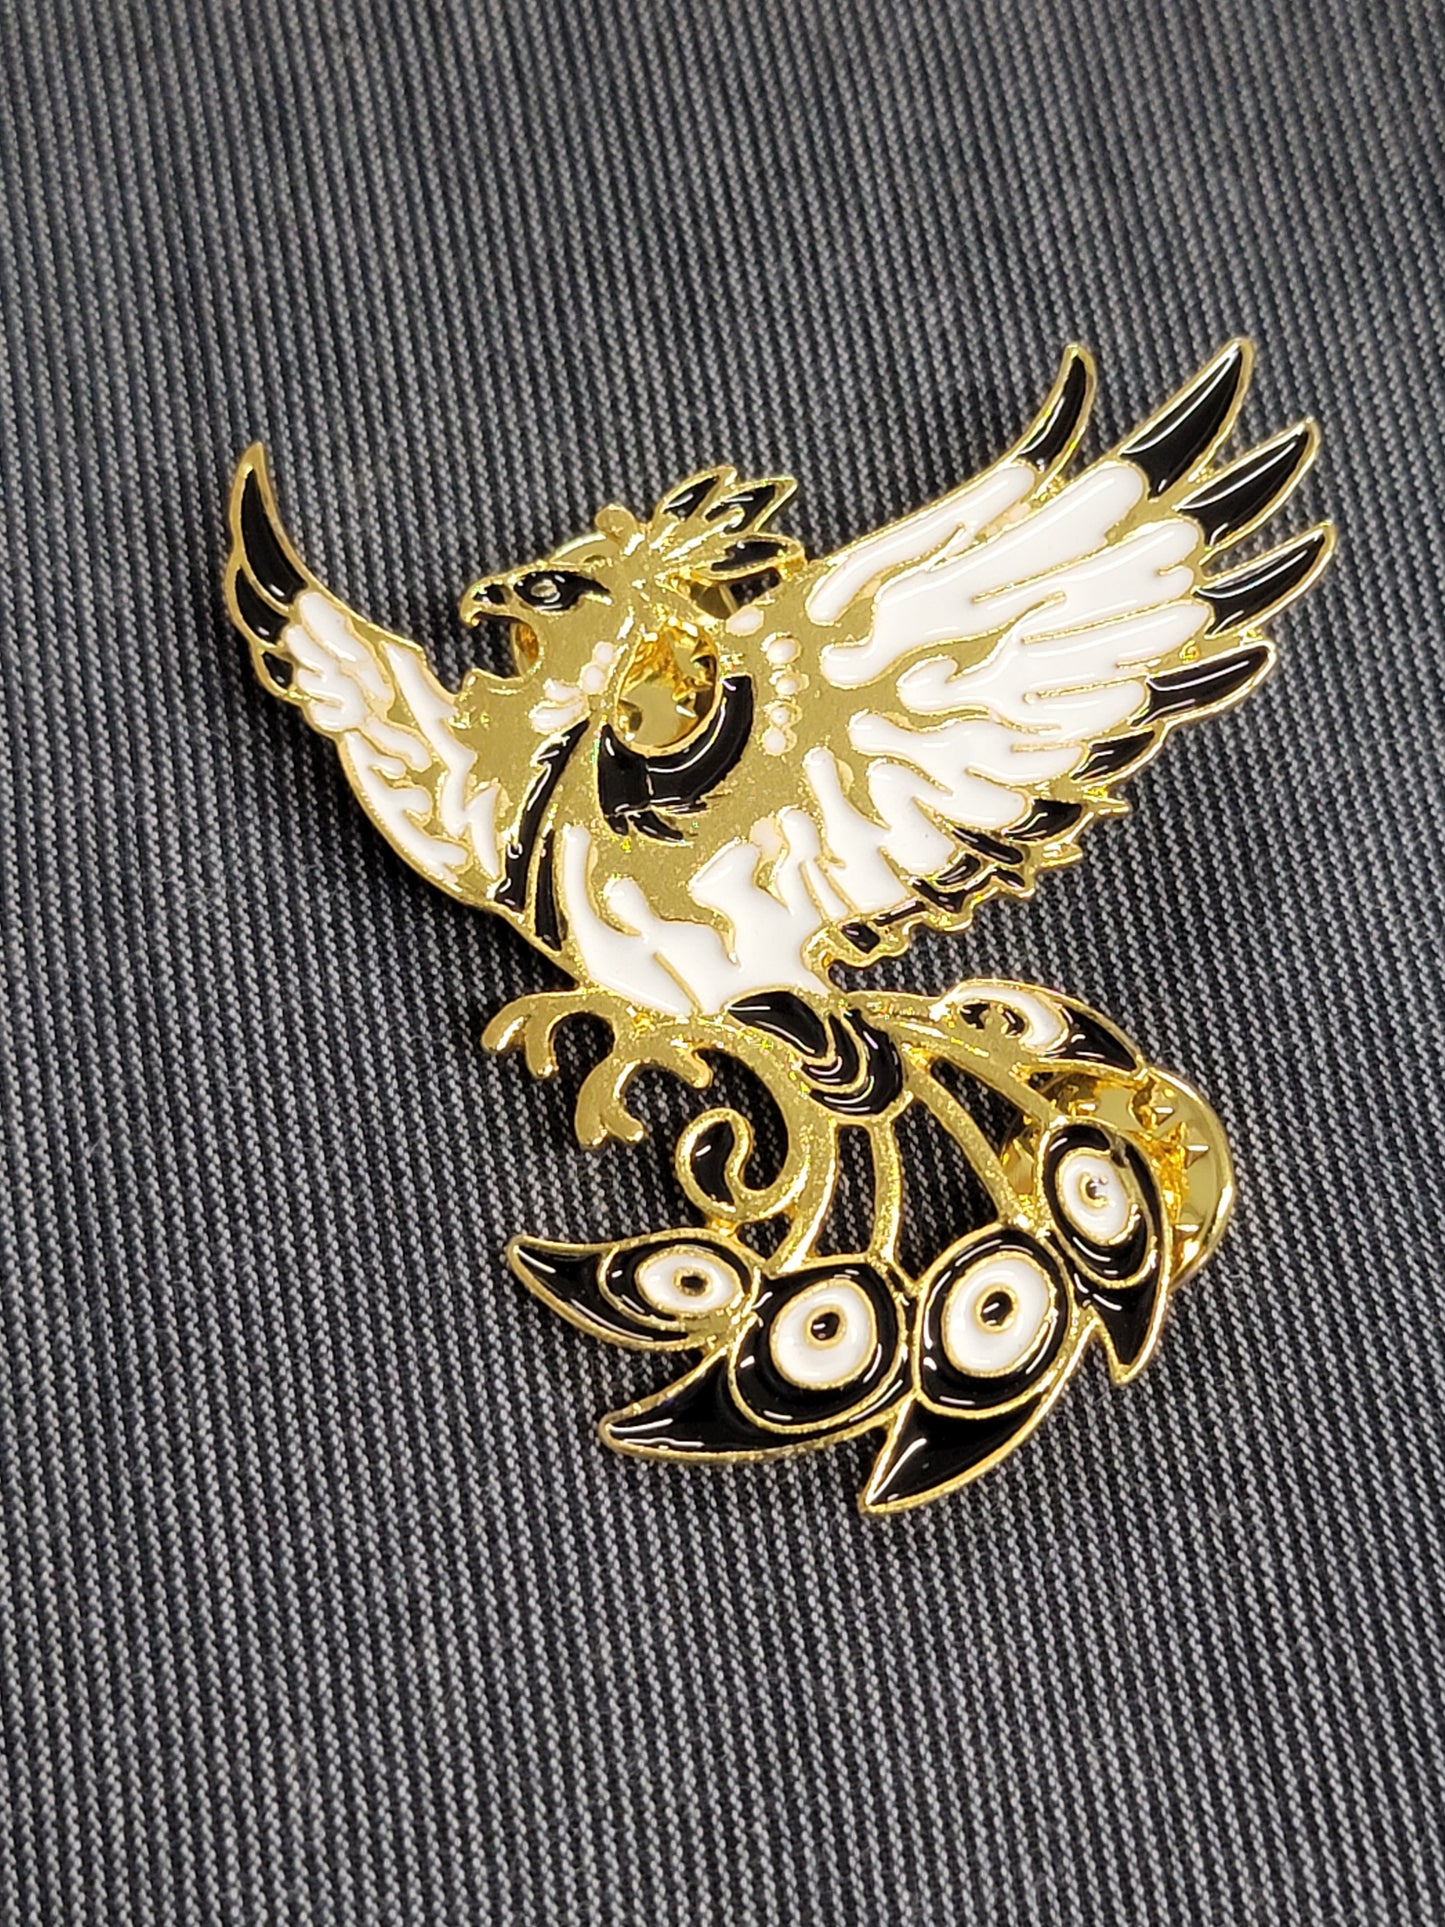 Phoenix Enamel Pin Metal Gothic Style Brooch